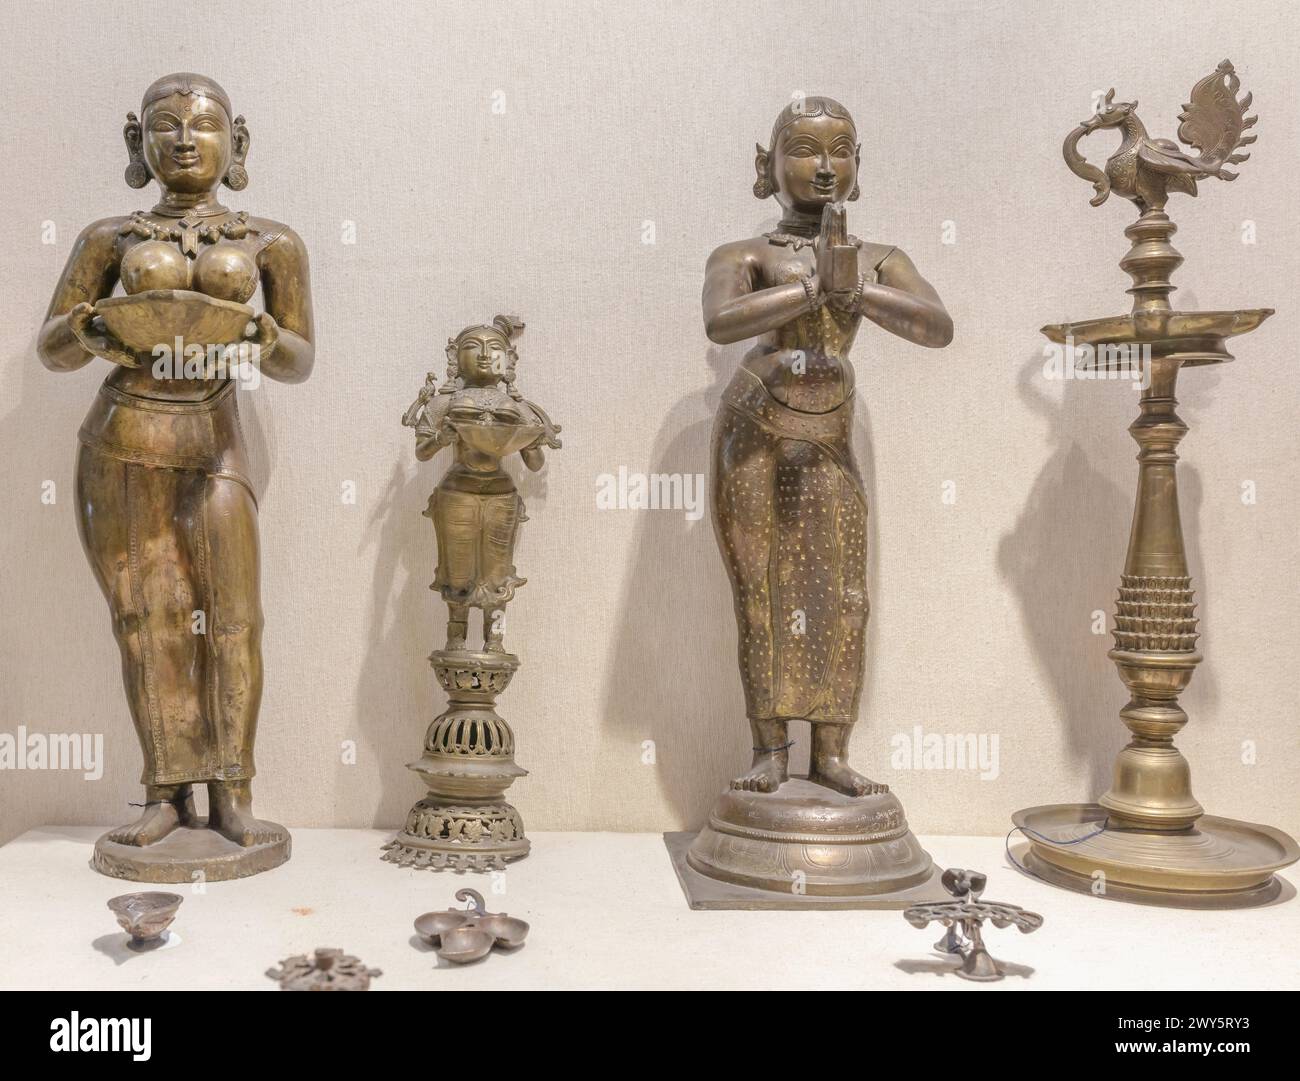 Figurines en bronze, Musée national de l'artisanat, New Delhi, Inde Banque D'Images